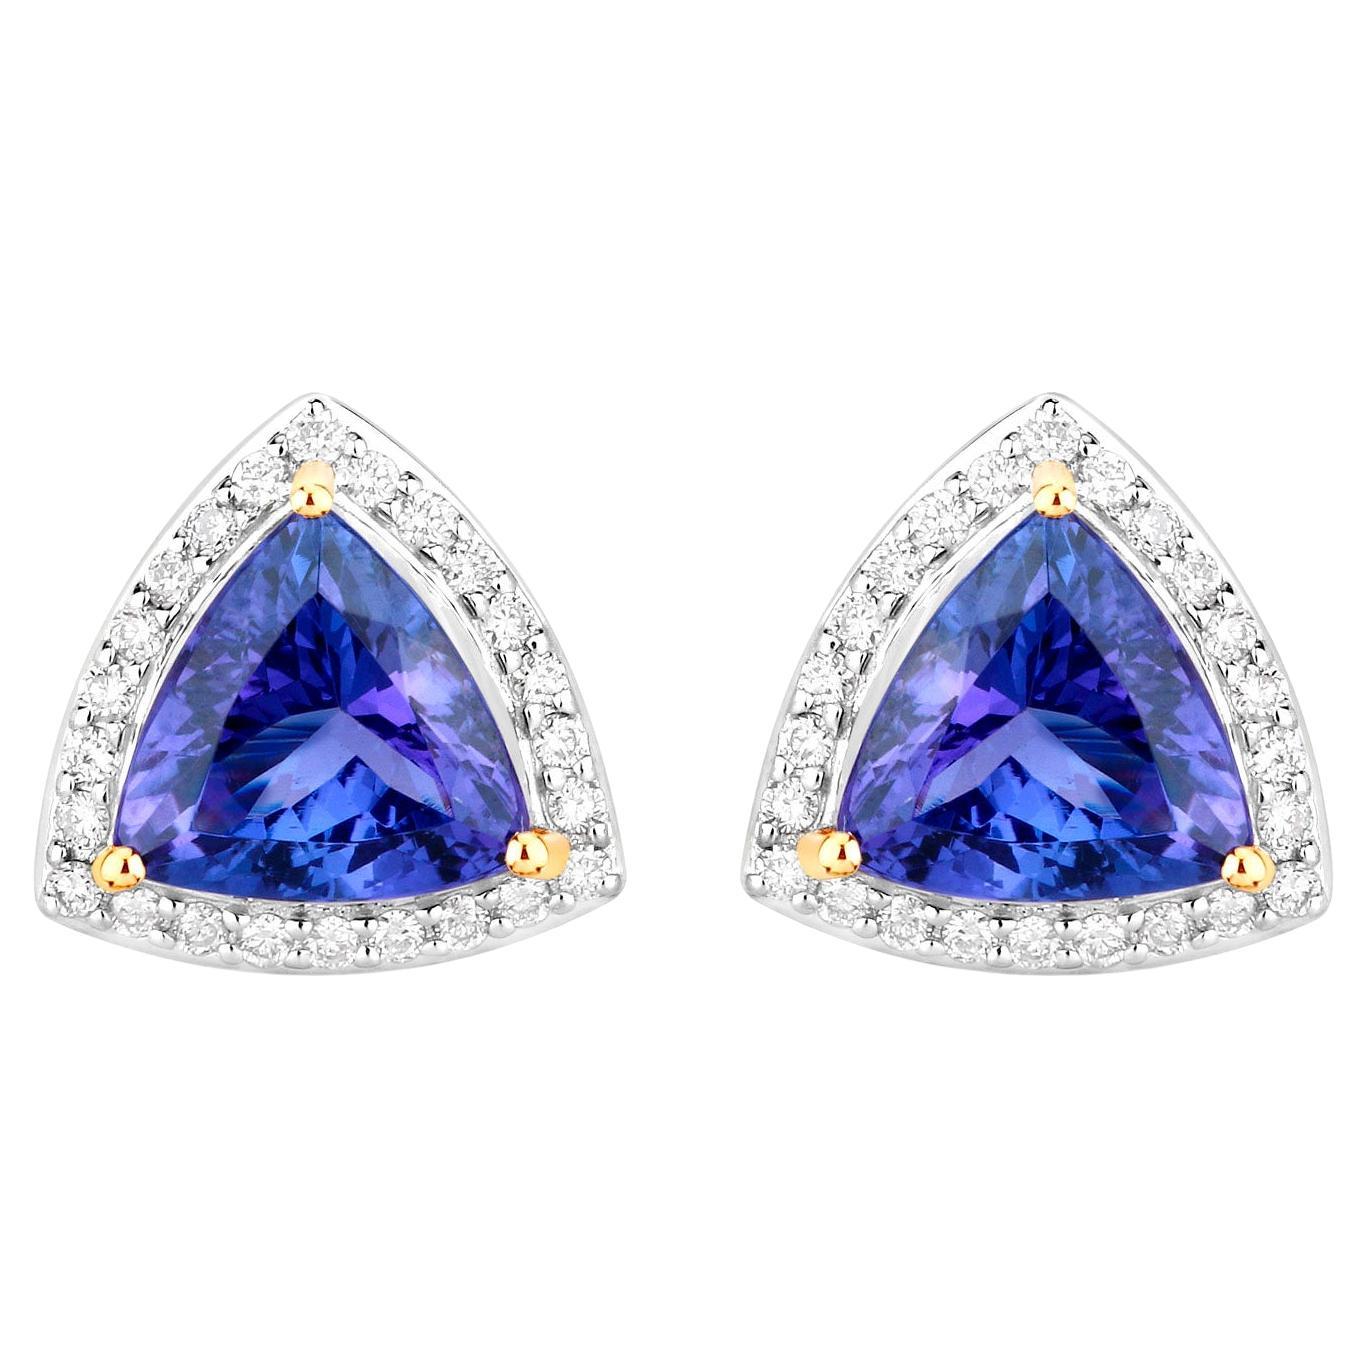 Trillion Cut Tanzanite Stud Earrings Diamond Halo 4.74 Carats 14K Gold